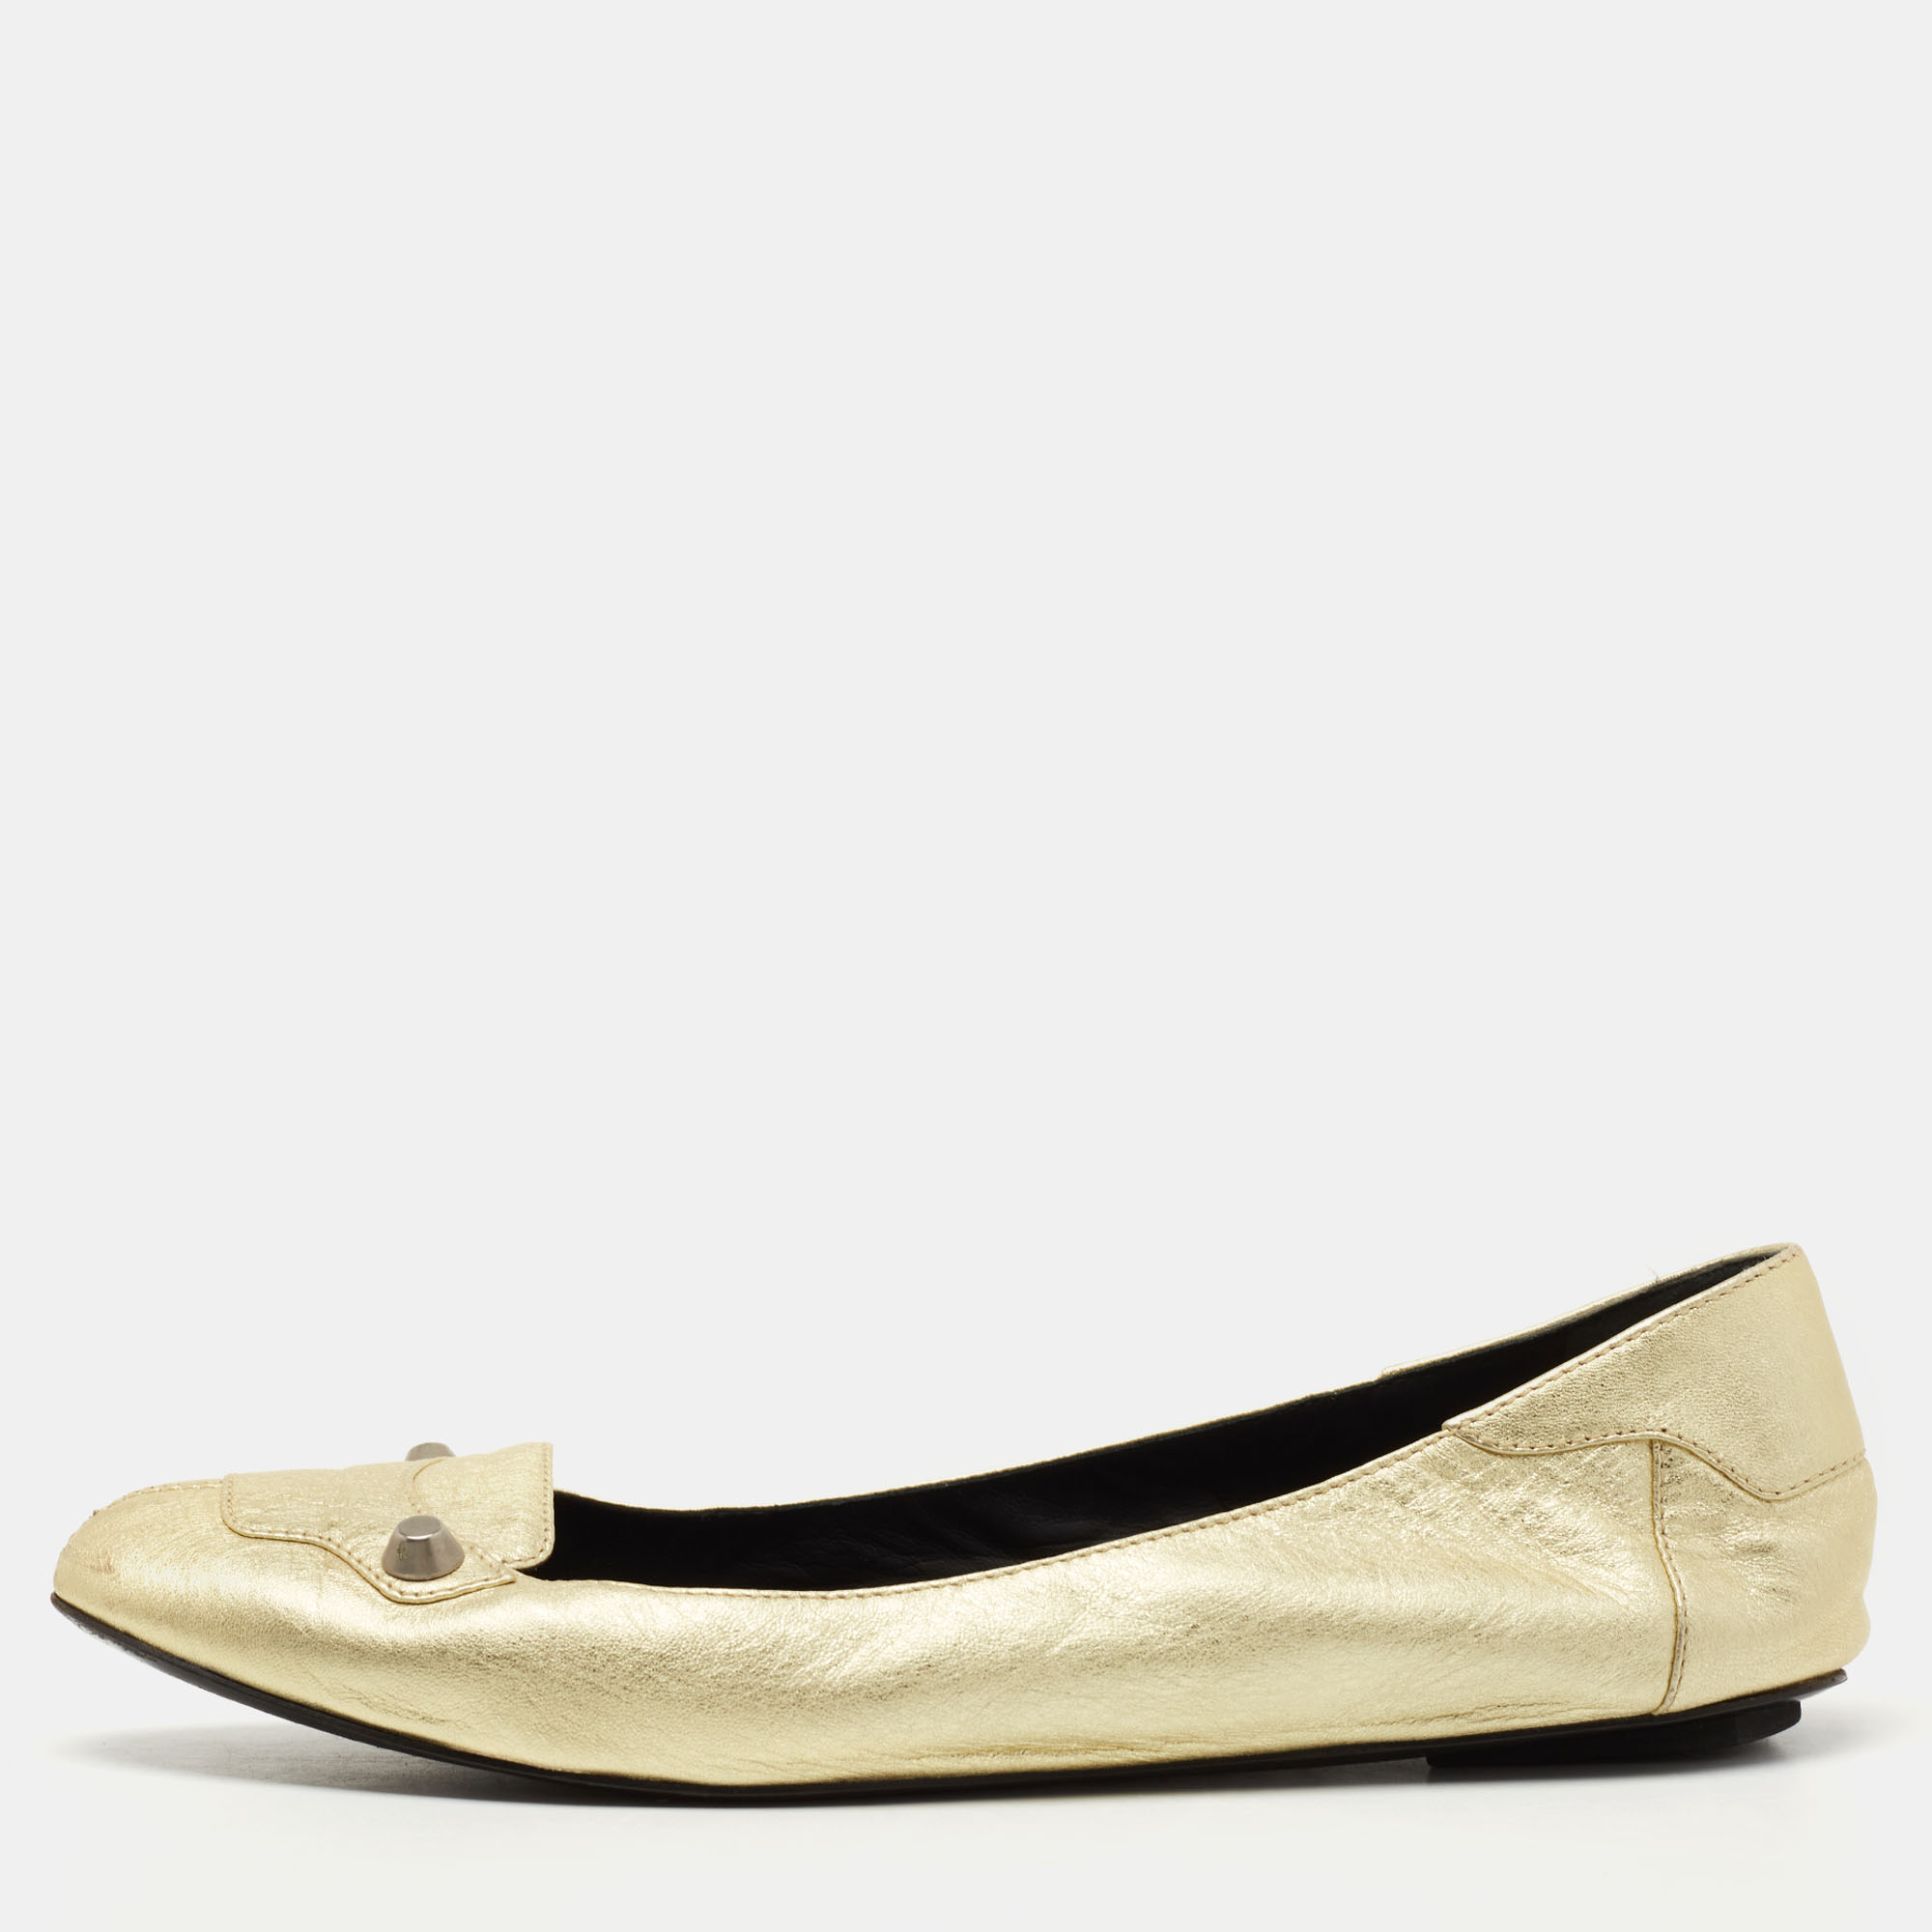 Balenciaga Gold Leather Studded Ballet Flats Size 38